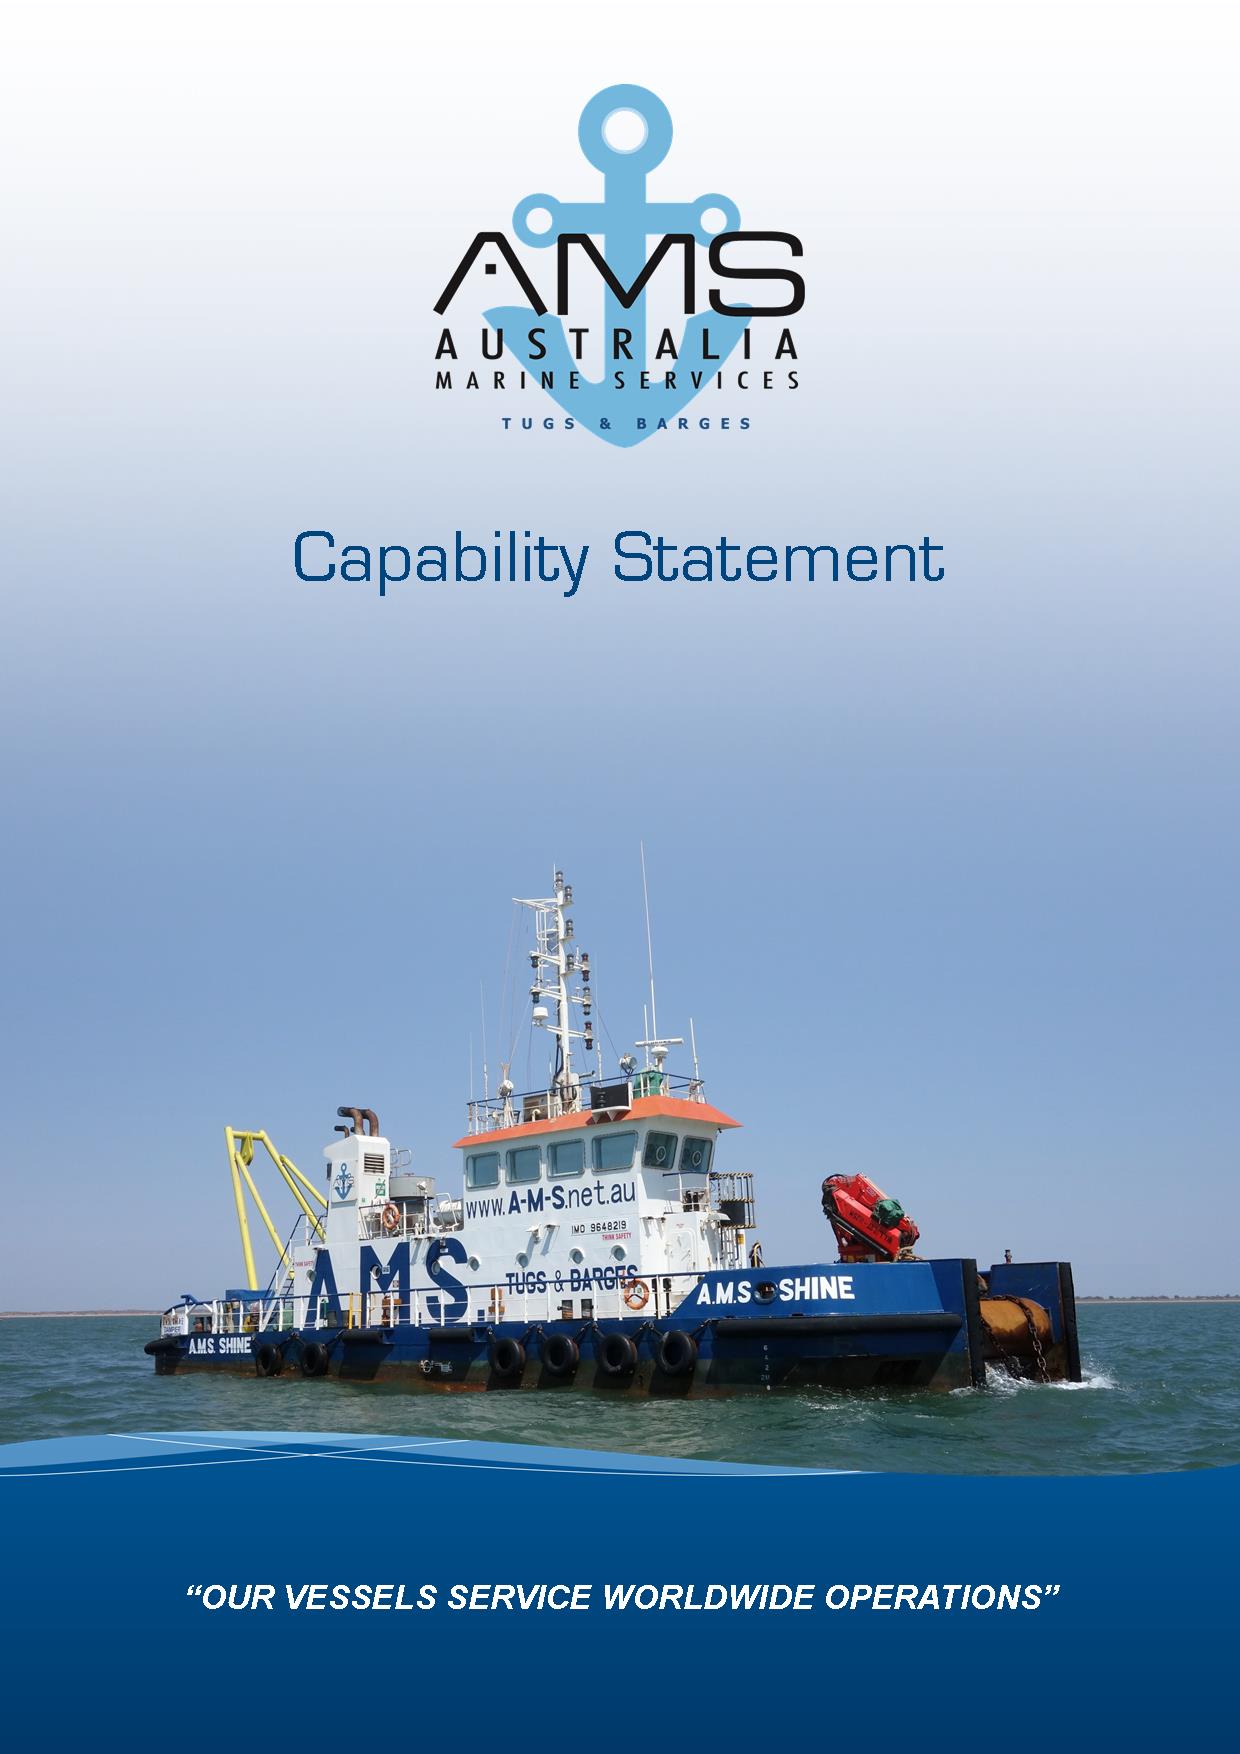 Capability Statement image for Australia Marine Services